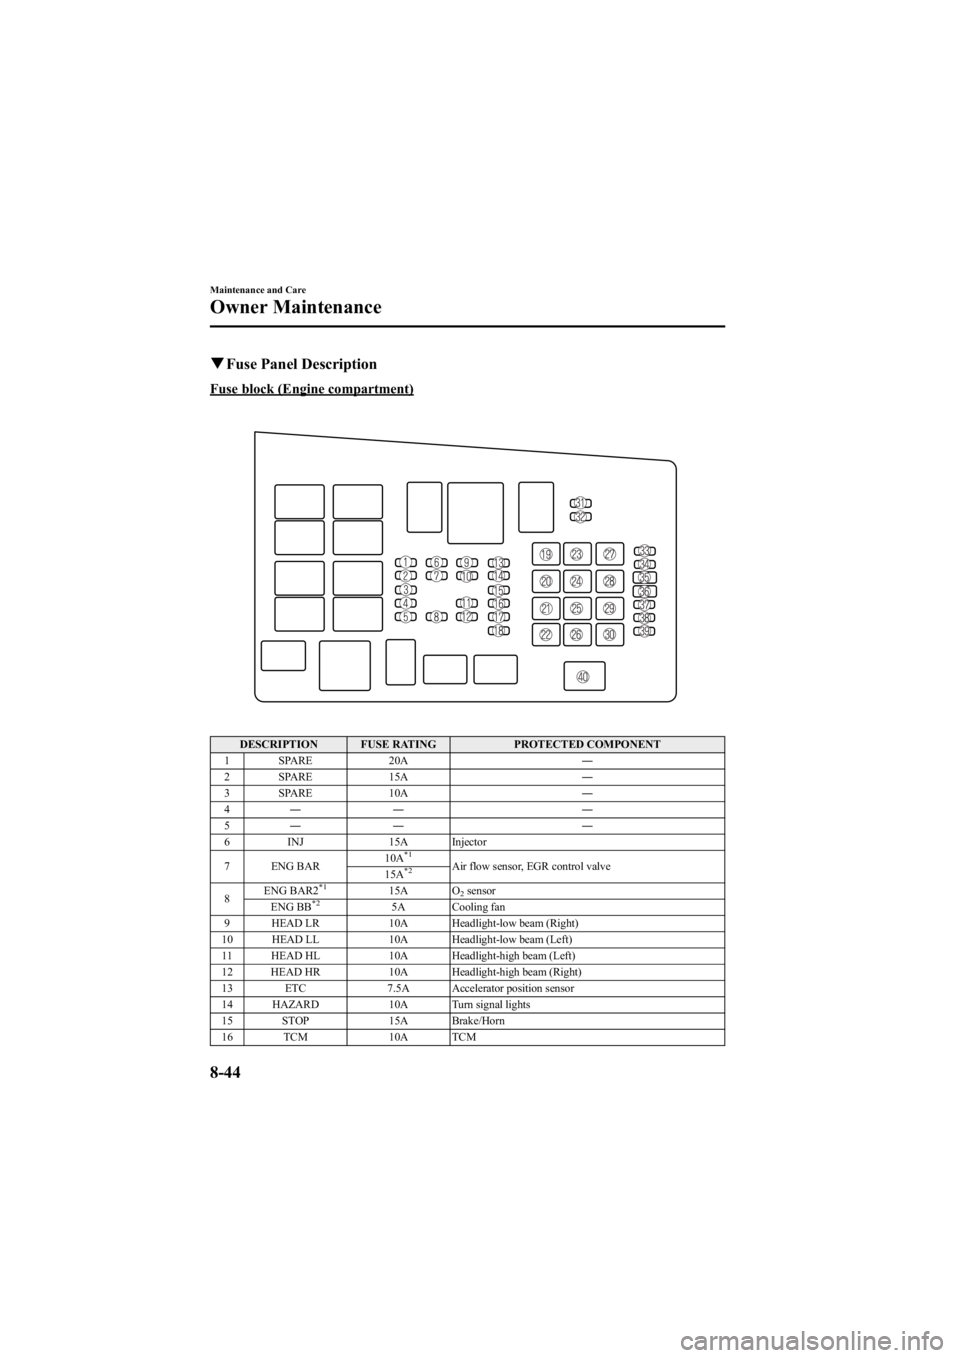 MAZDA MODEL 6 SPORT SEDAN 2005  Owners Manual Black plate (294,1)
qFuse Panel Description
Fuse block (Engine compartment)
DESCRIPTION FUSE RATING PROTECTED COMPONENT
1 SPARE 20A ―
2 SPARE 15A ―
3 SPARE 10A ―
4 ―― ―
5 ―― ―
6 INJ 